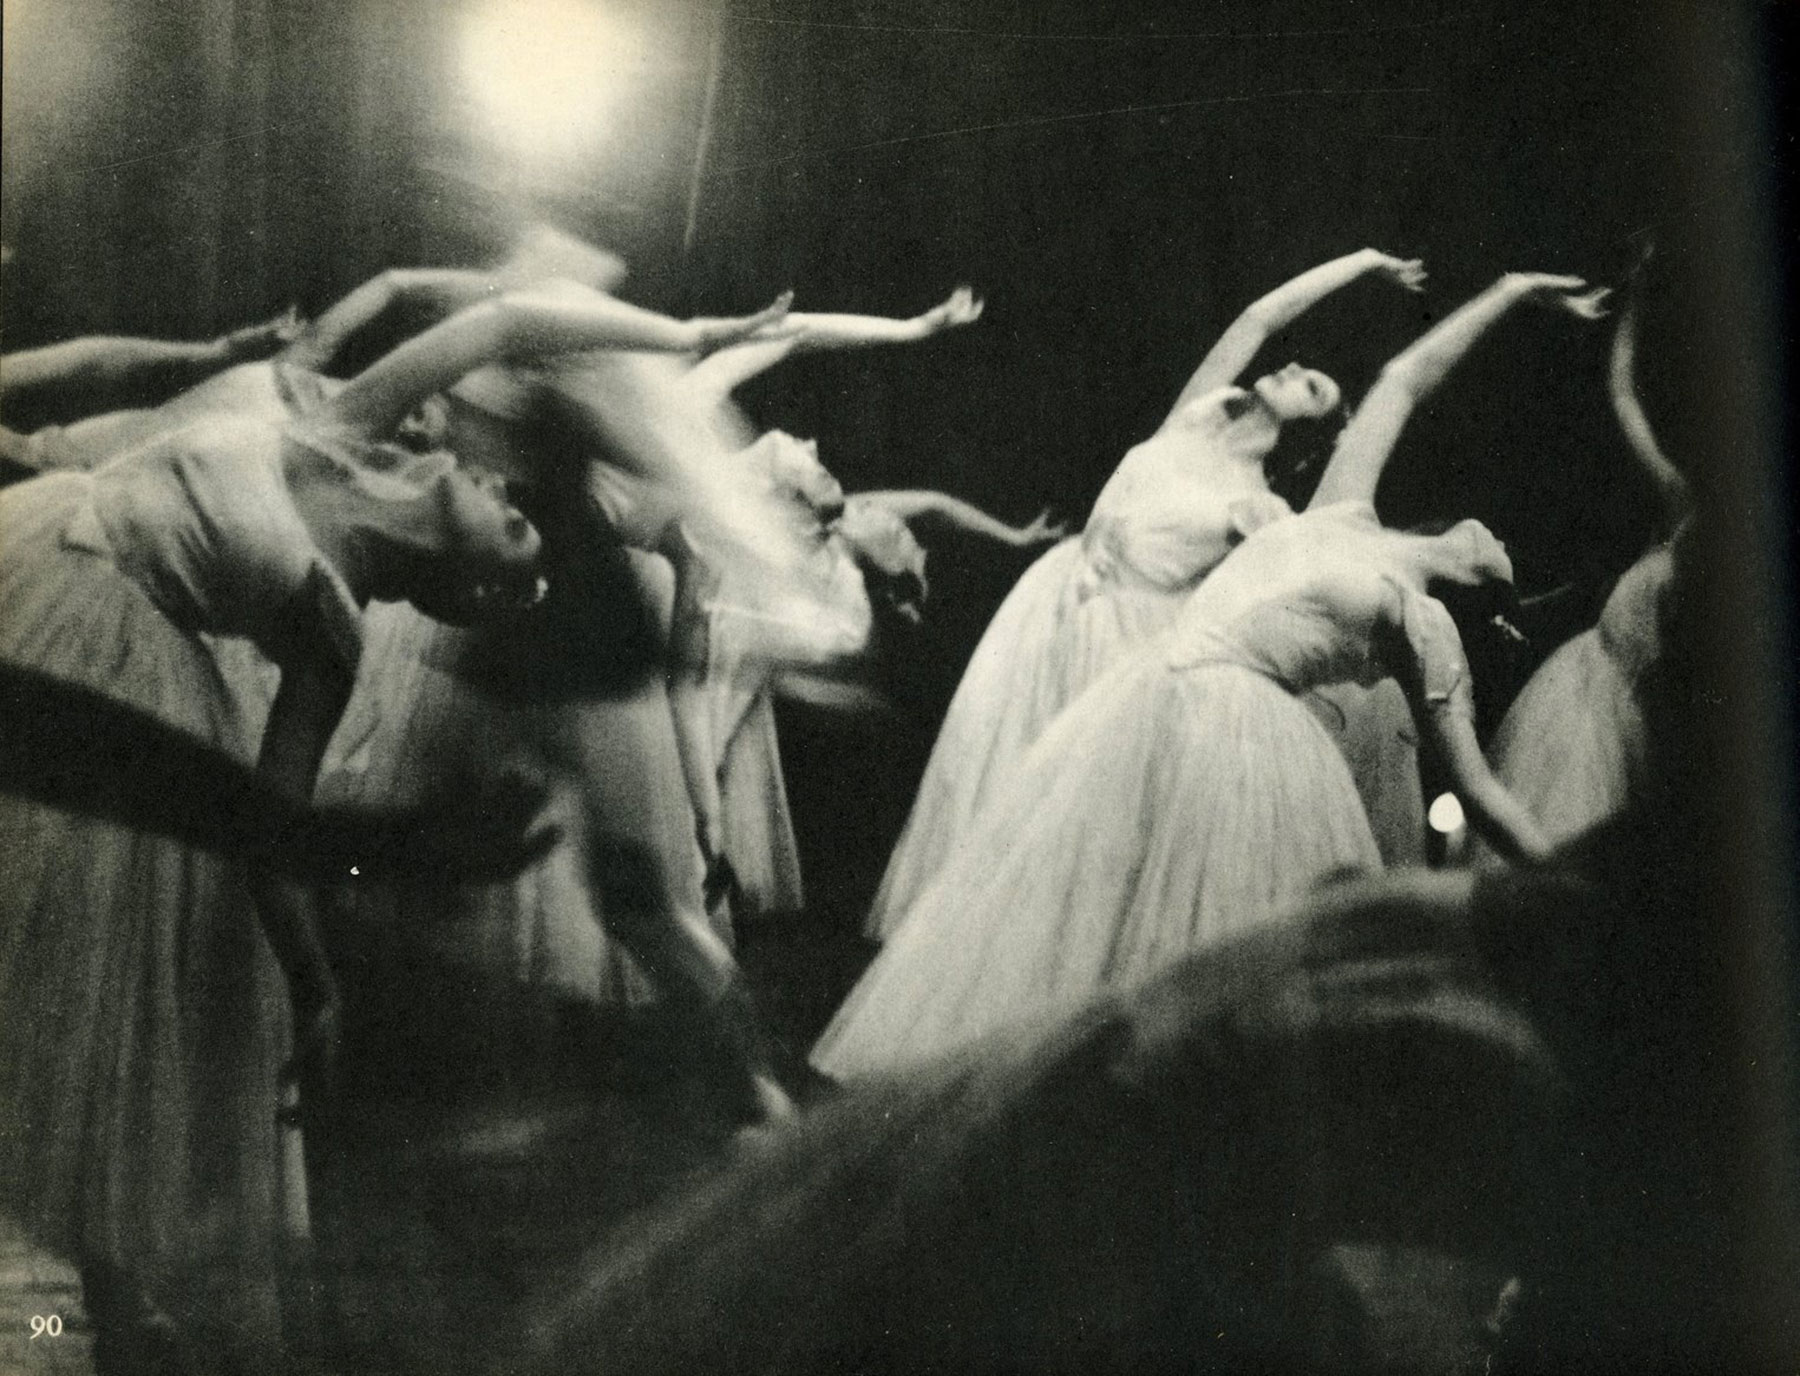 Ballet – Alexey Brodovitch, 1945